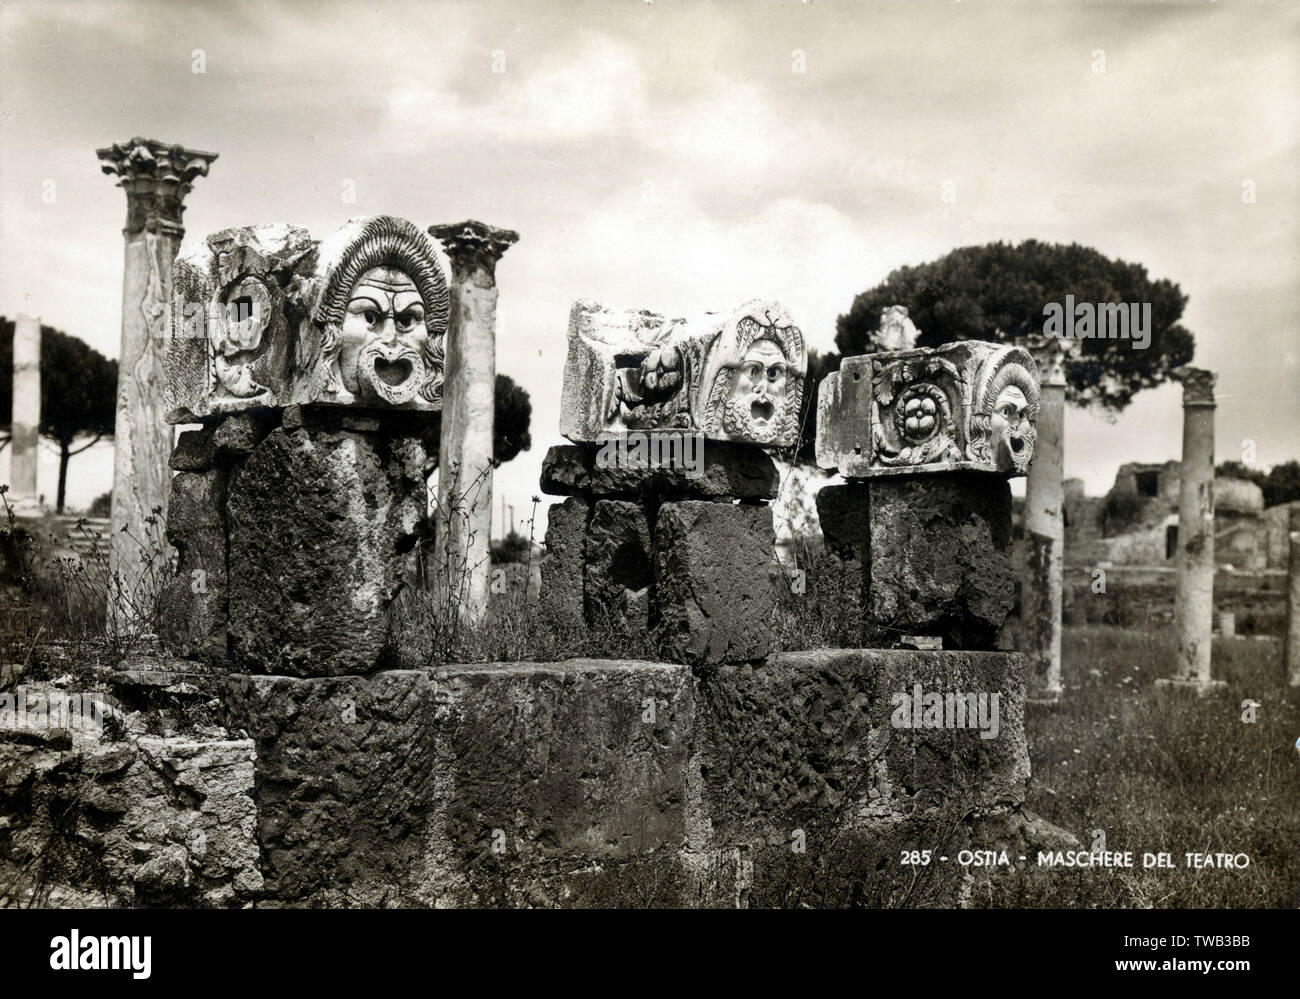 Ostia, Rome, Italie - masques théâtraux Banque D'Images